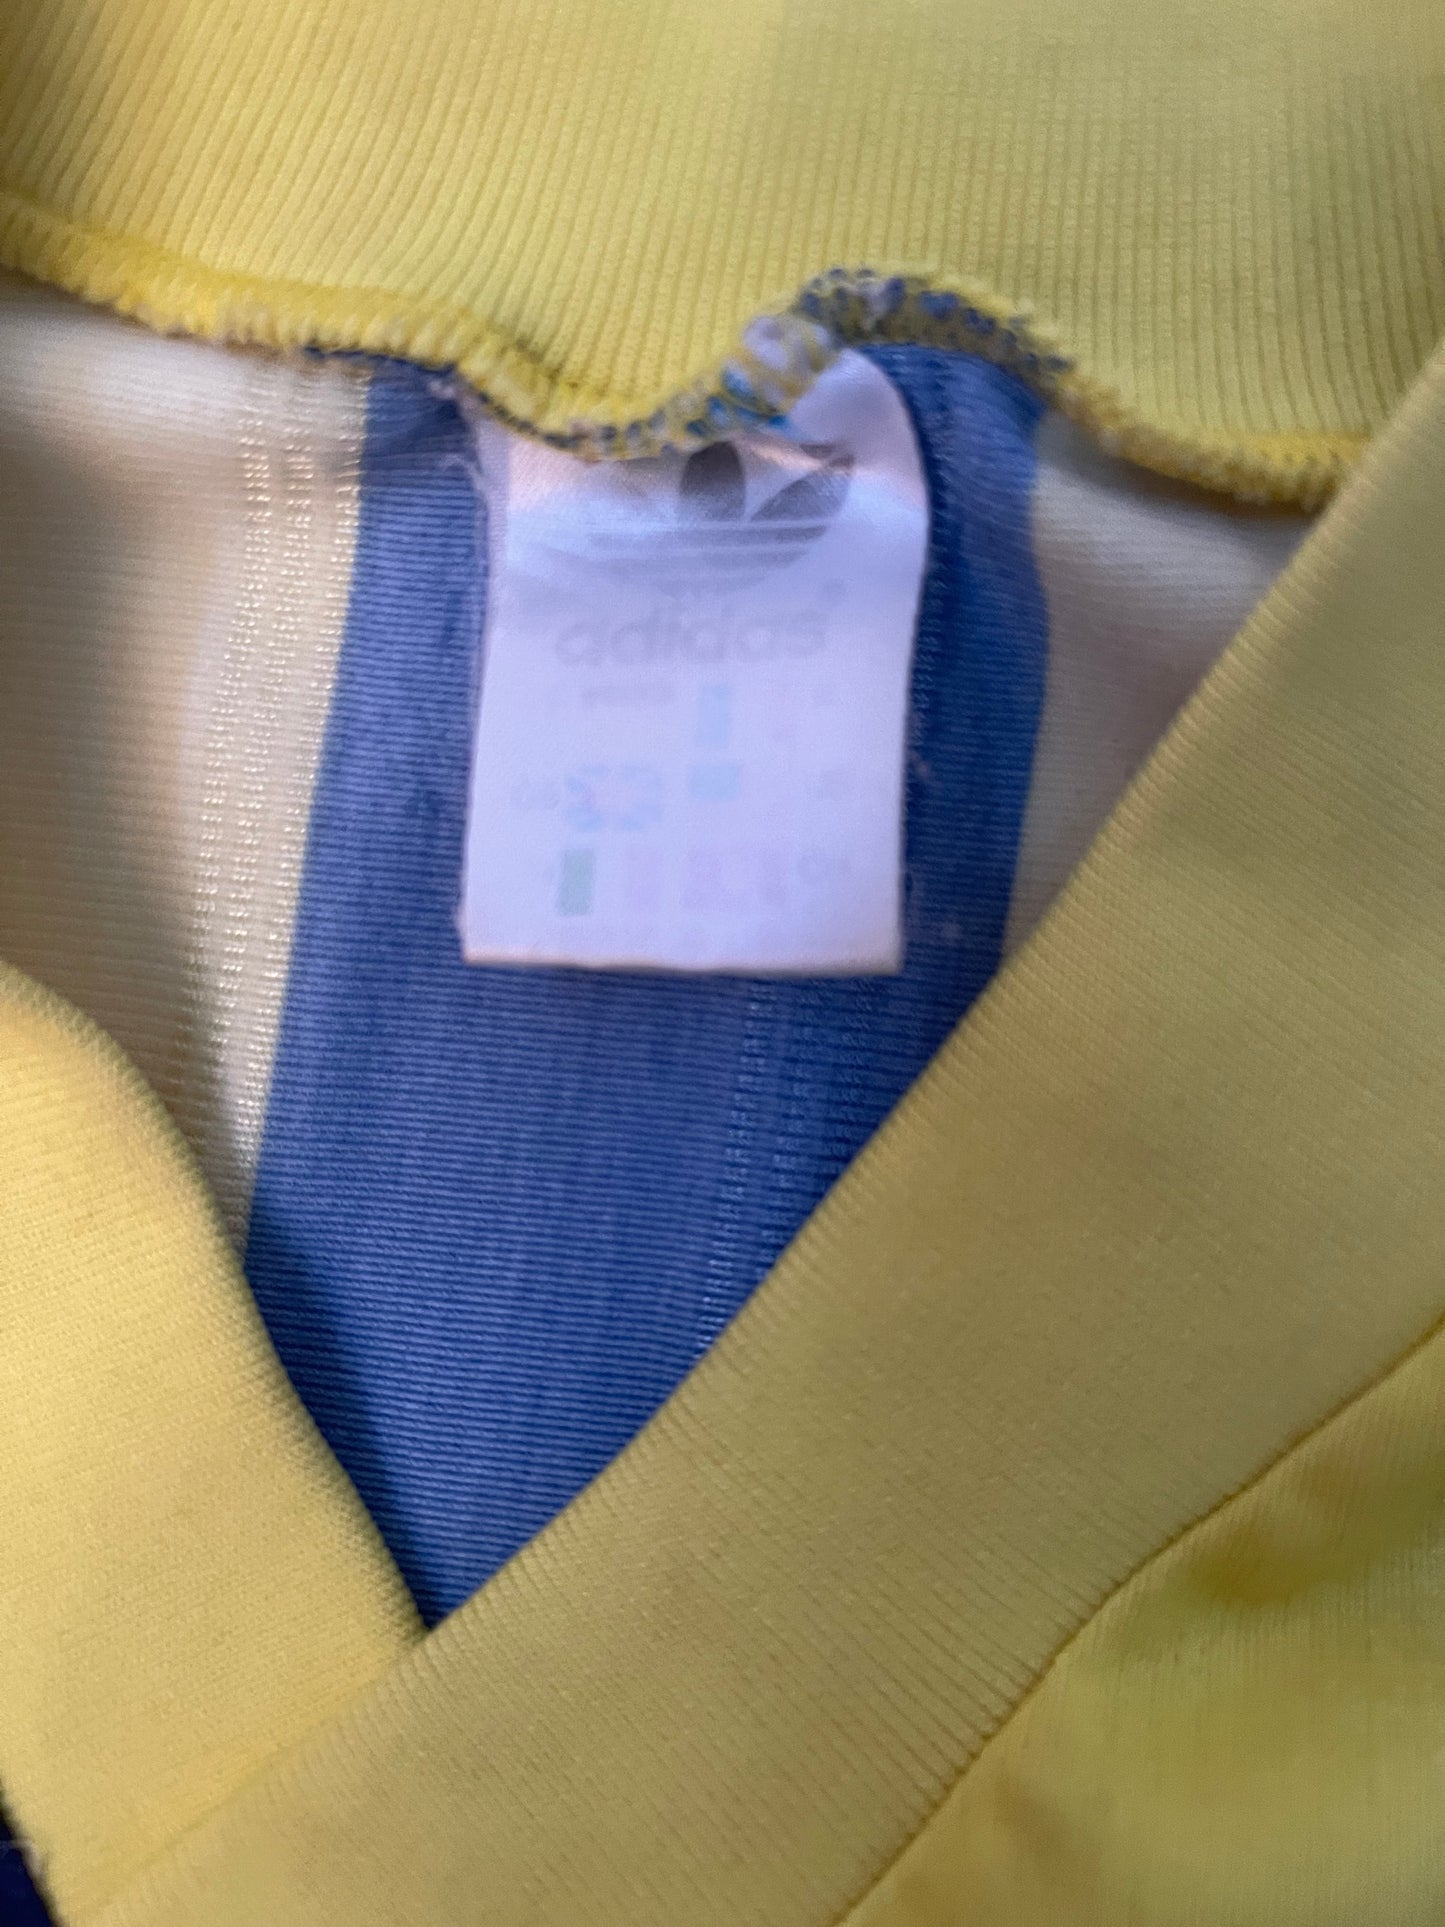 Vintage Fenerbahçe Spor Kulübü Adidas 1995-1996 Home Football Shirt No 5 Blue Yellow Emlak Bankası Size M